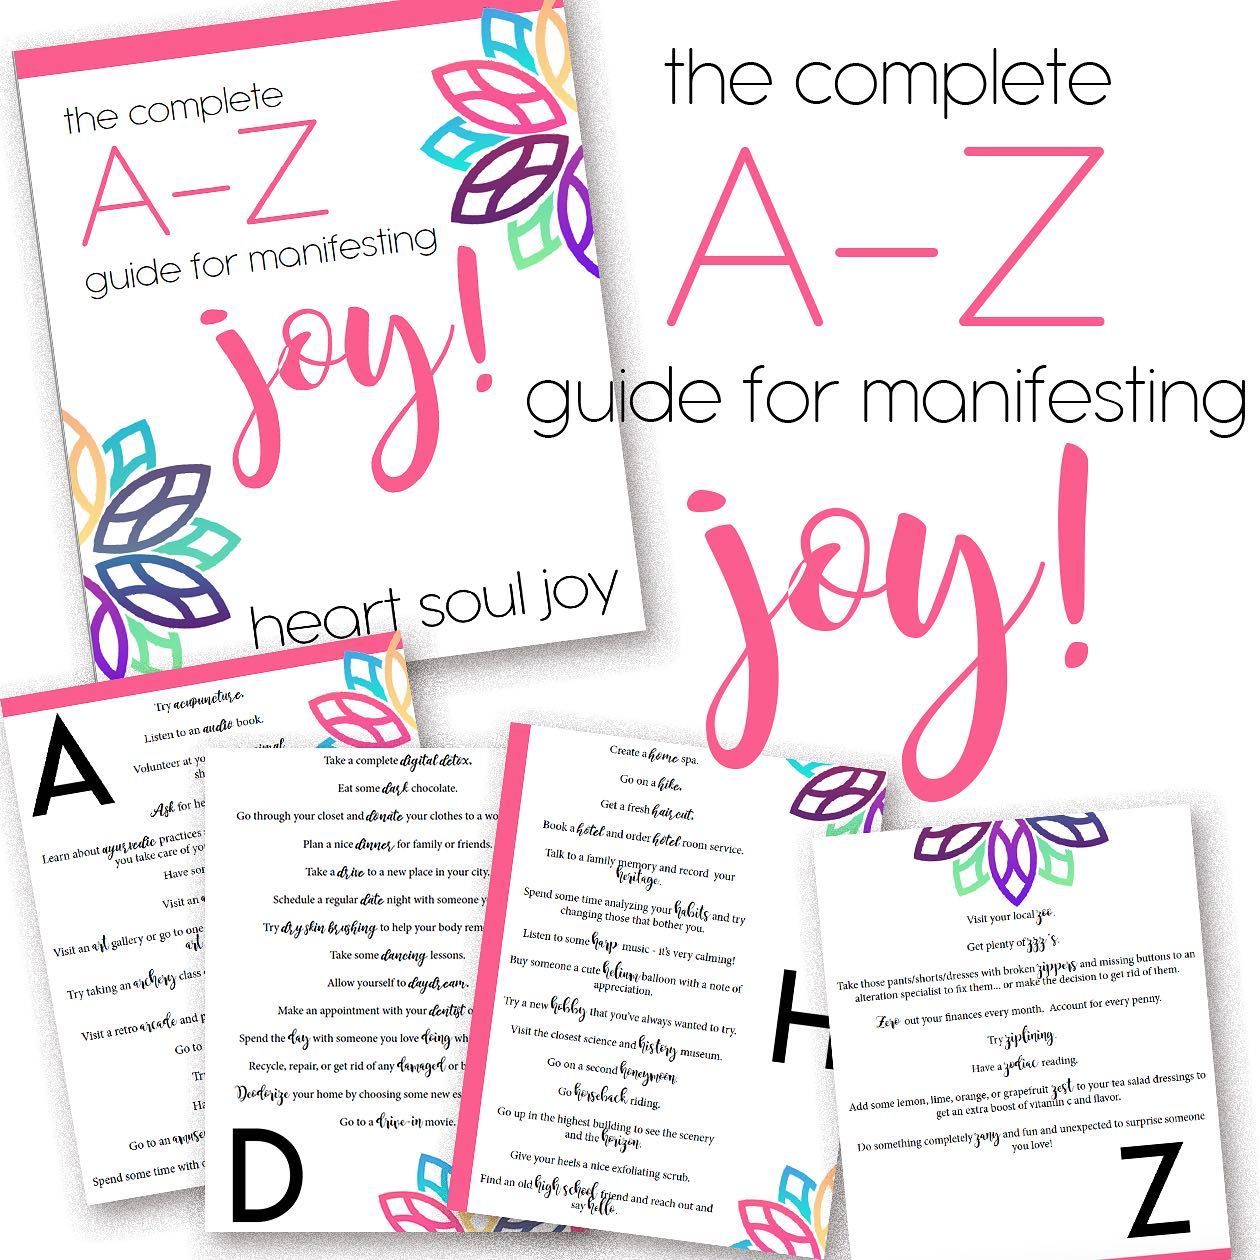 a-z guide for manifesting joy